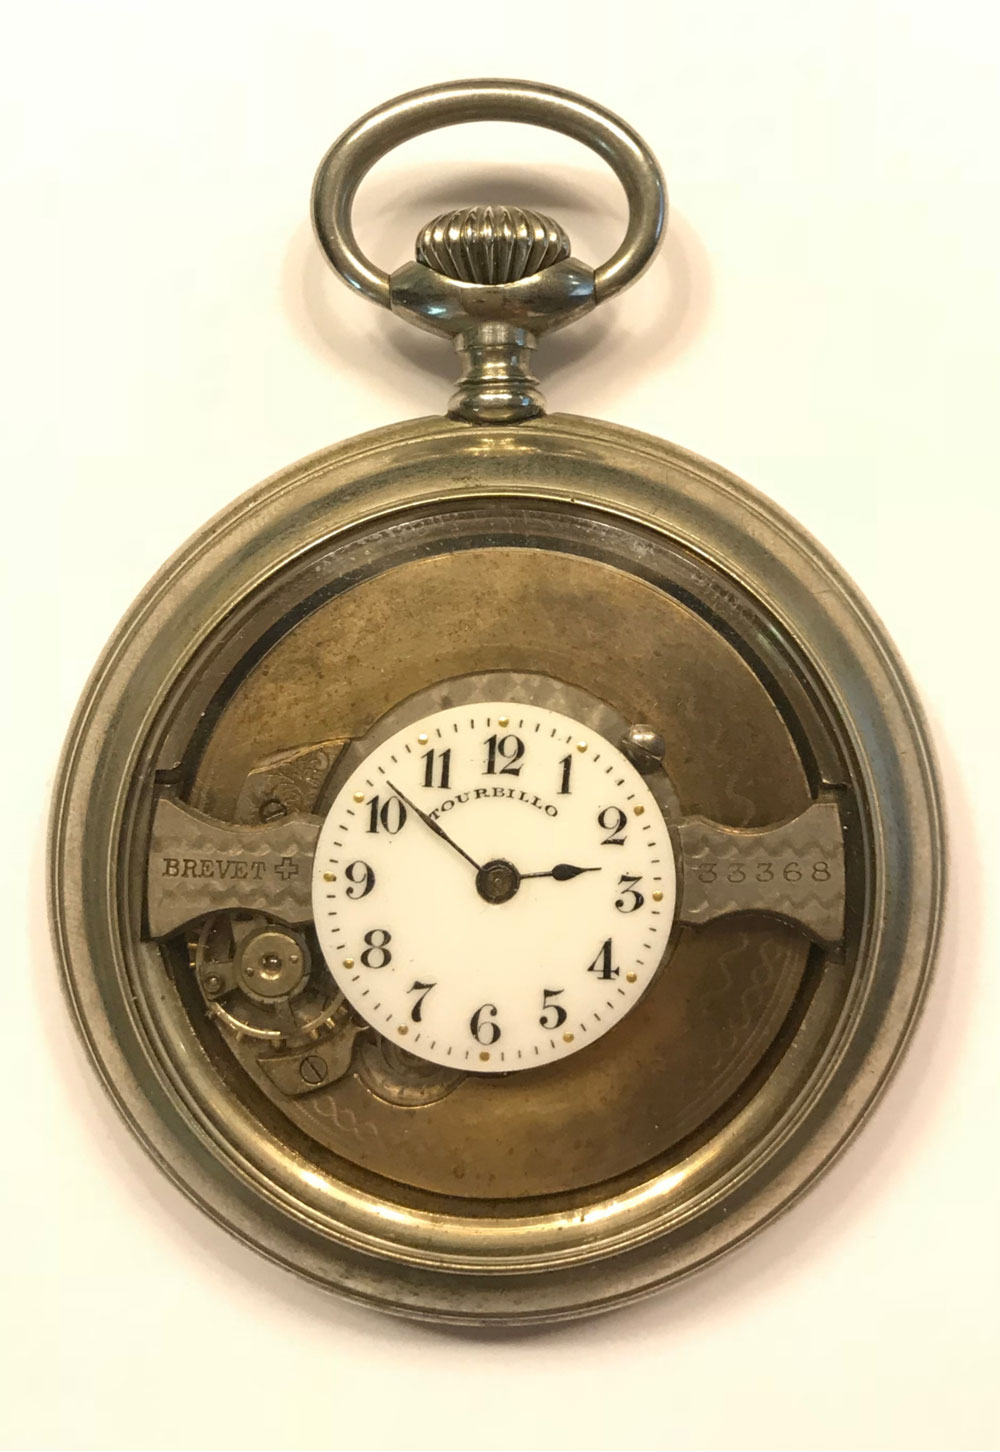 reloj de bolsillo de Breguet adquirido en1836 por monsieur Laffite, presidente del Consejo del Ministro francés Luis Filipe.